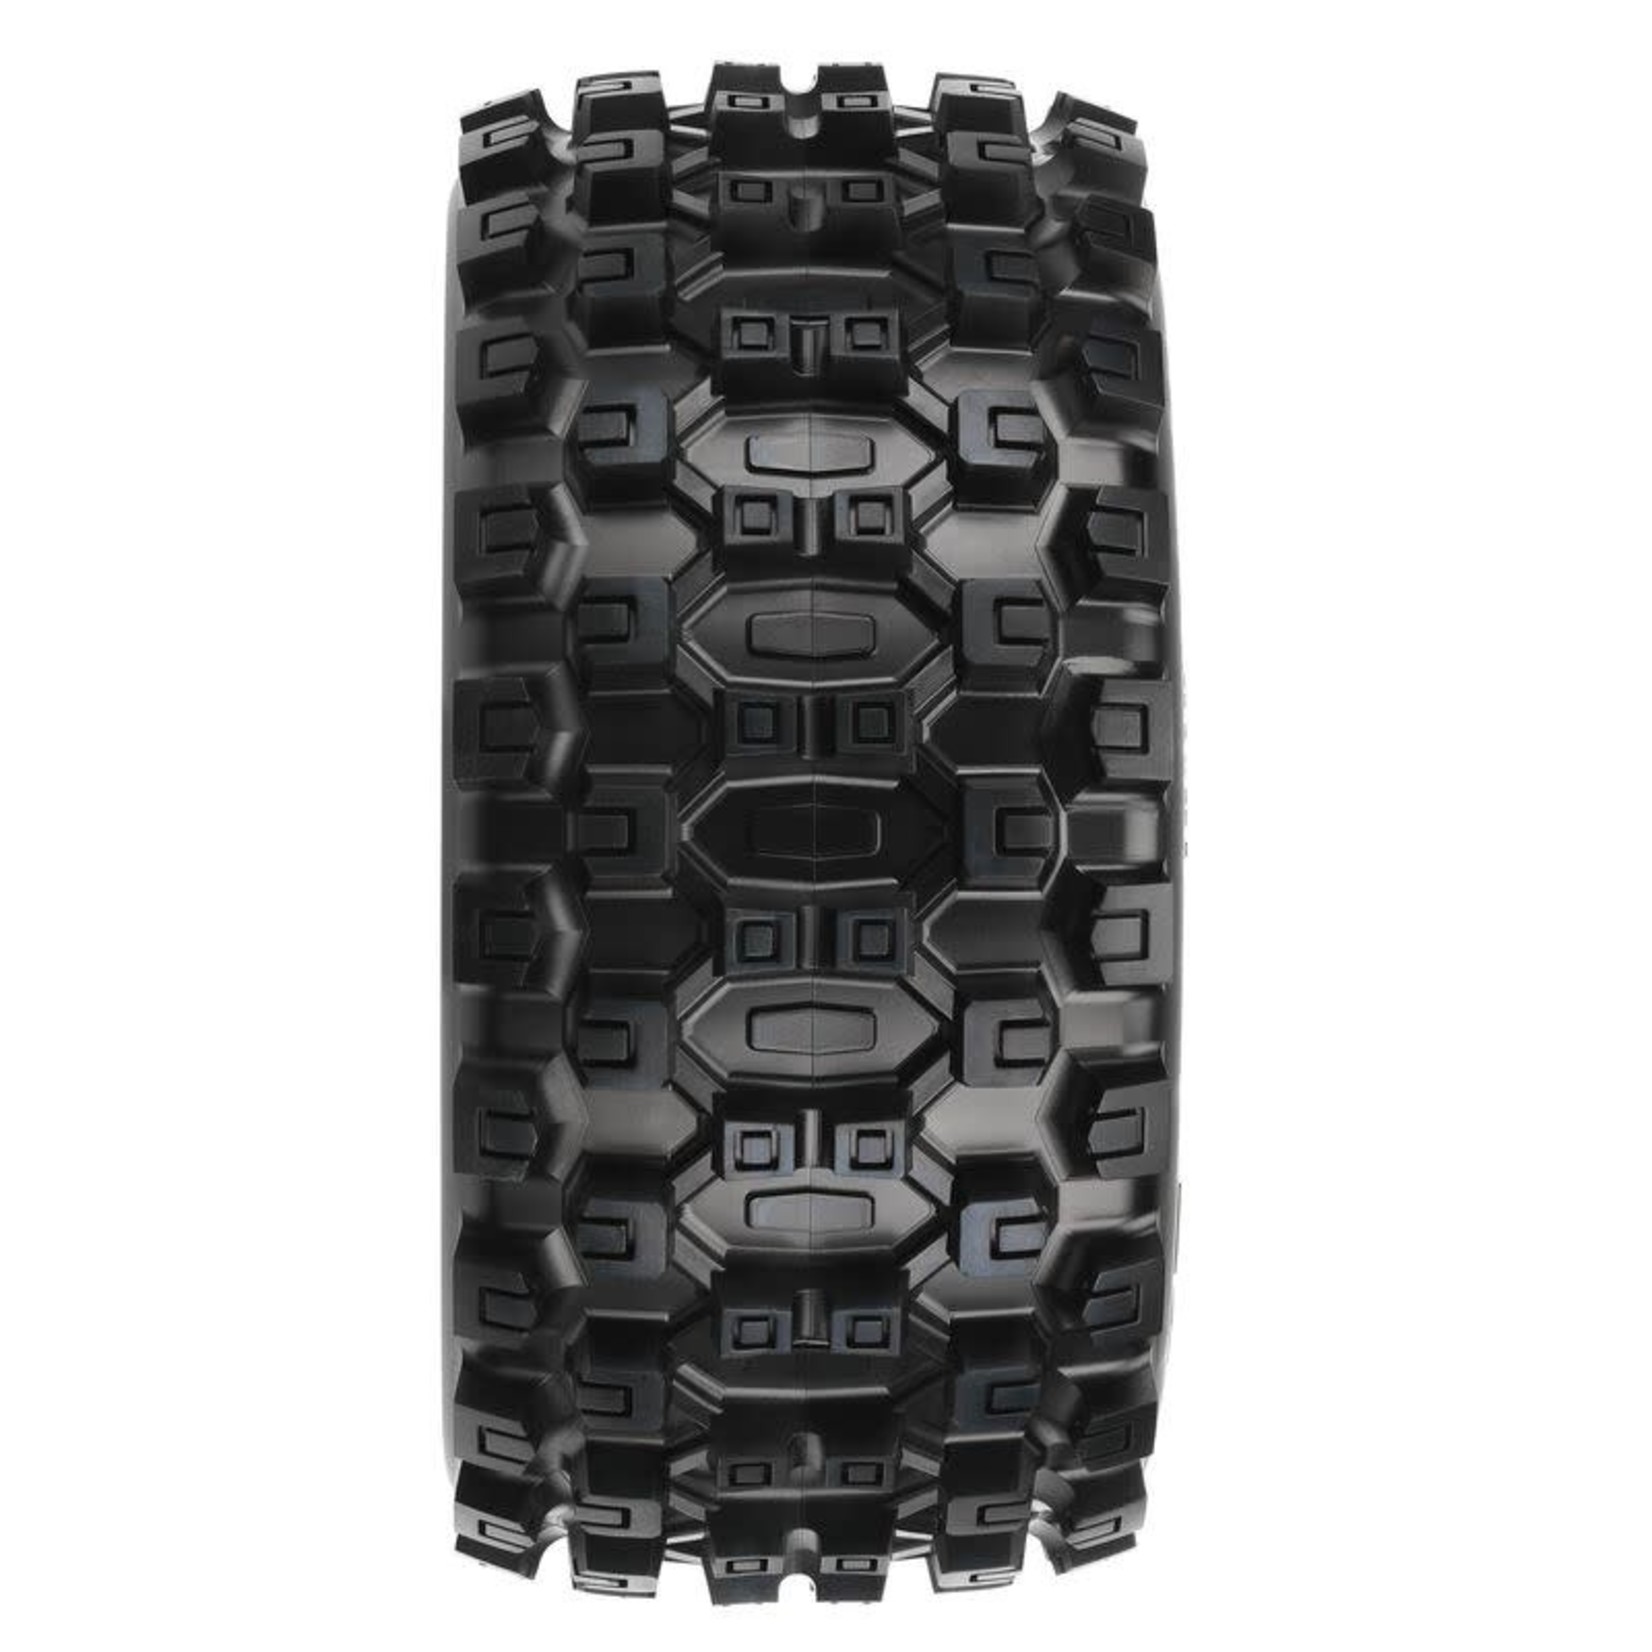 Pro-Line Pro-Line X-Maxx Badlands MX43 Pro-Loc Pre-Mounted All Terrain Tires (MX43) w/Impulse Pro-Loc Wheels (Black) (2) #10131-13